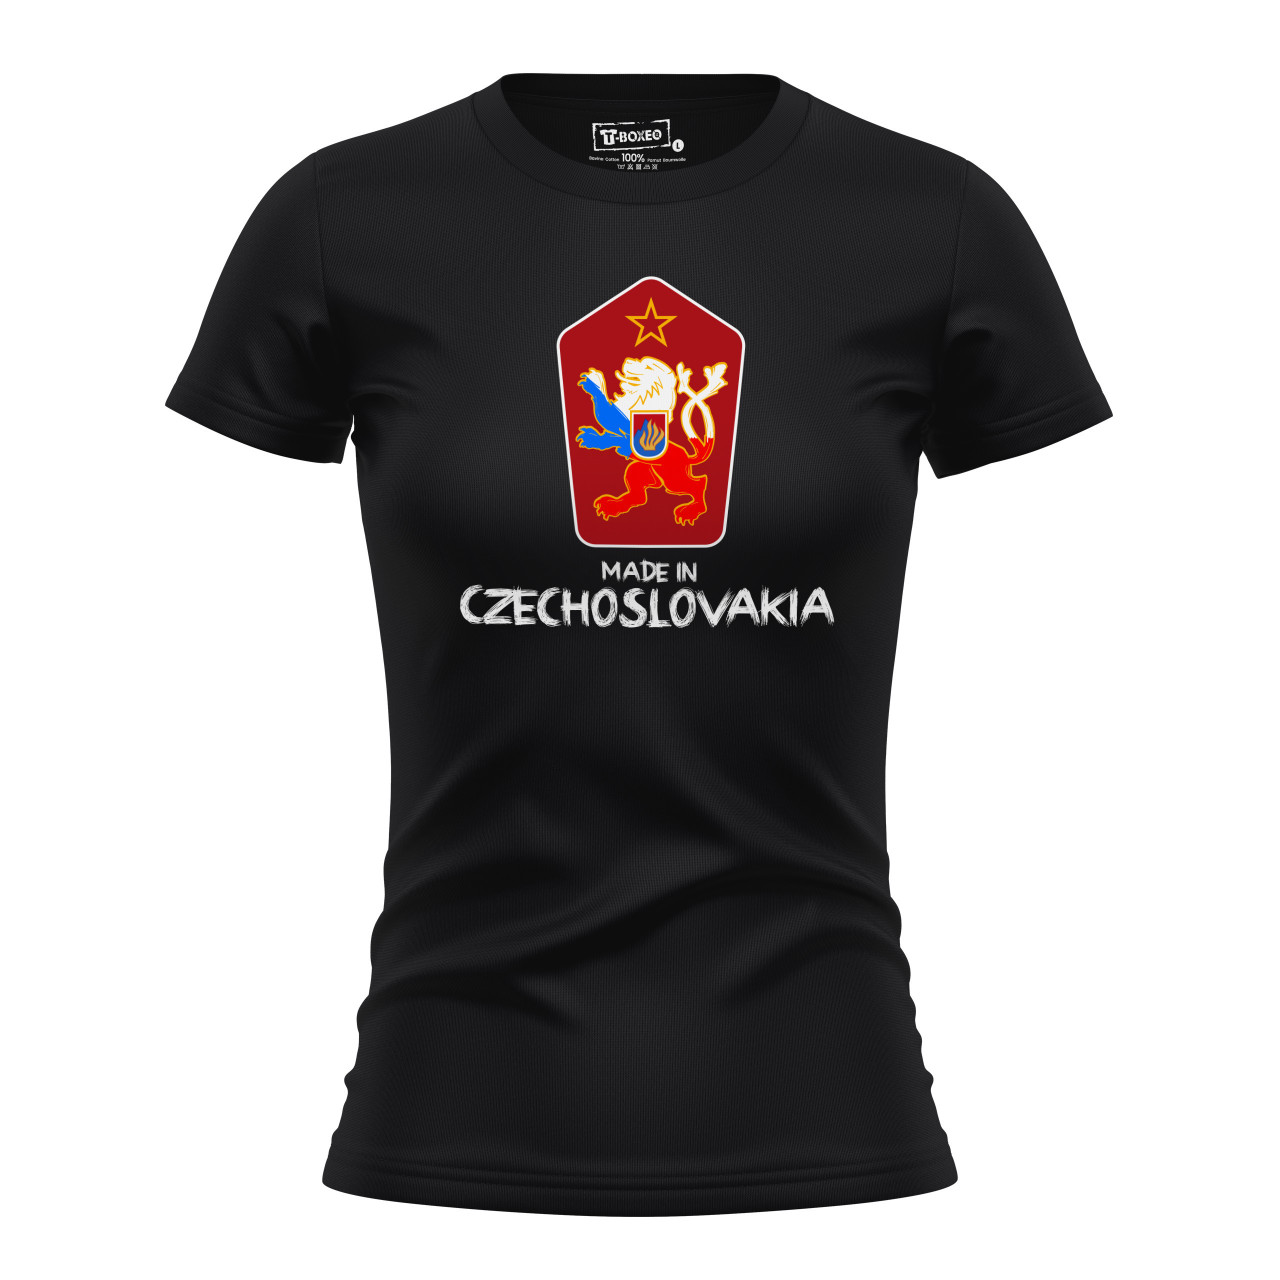 Dámské tričko s potiskem “Made in Czechoslovakia”